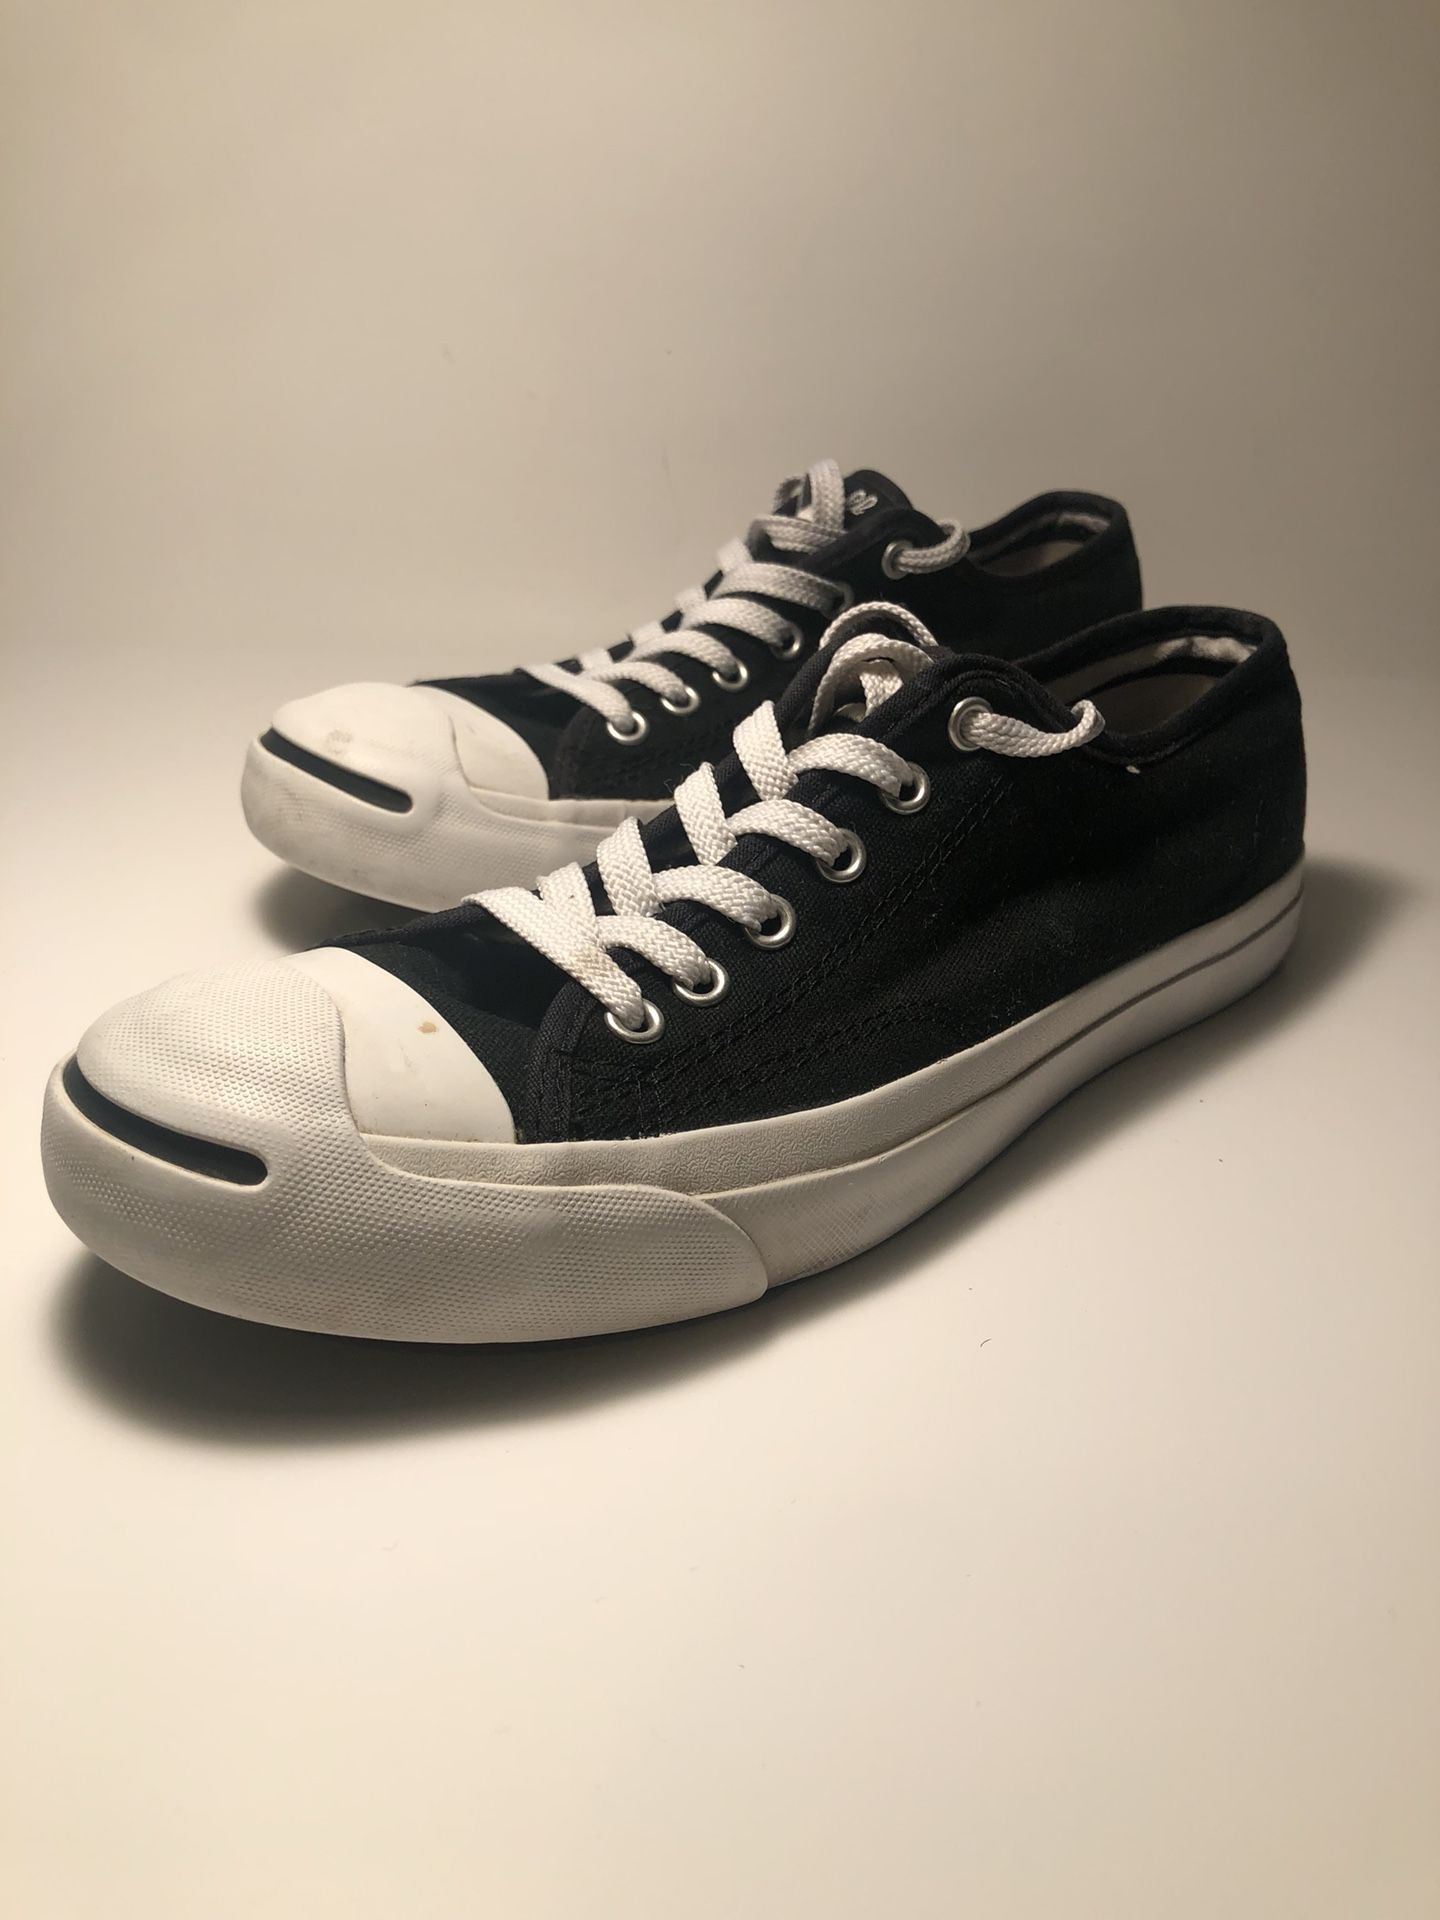 CONVERSE Jack Purcell Black White Canvas Women's Size 9 Tennis Shoes